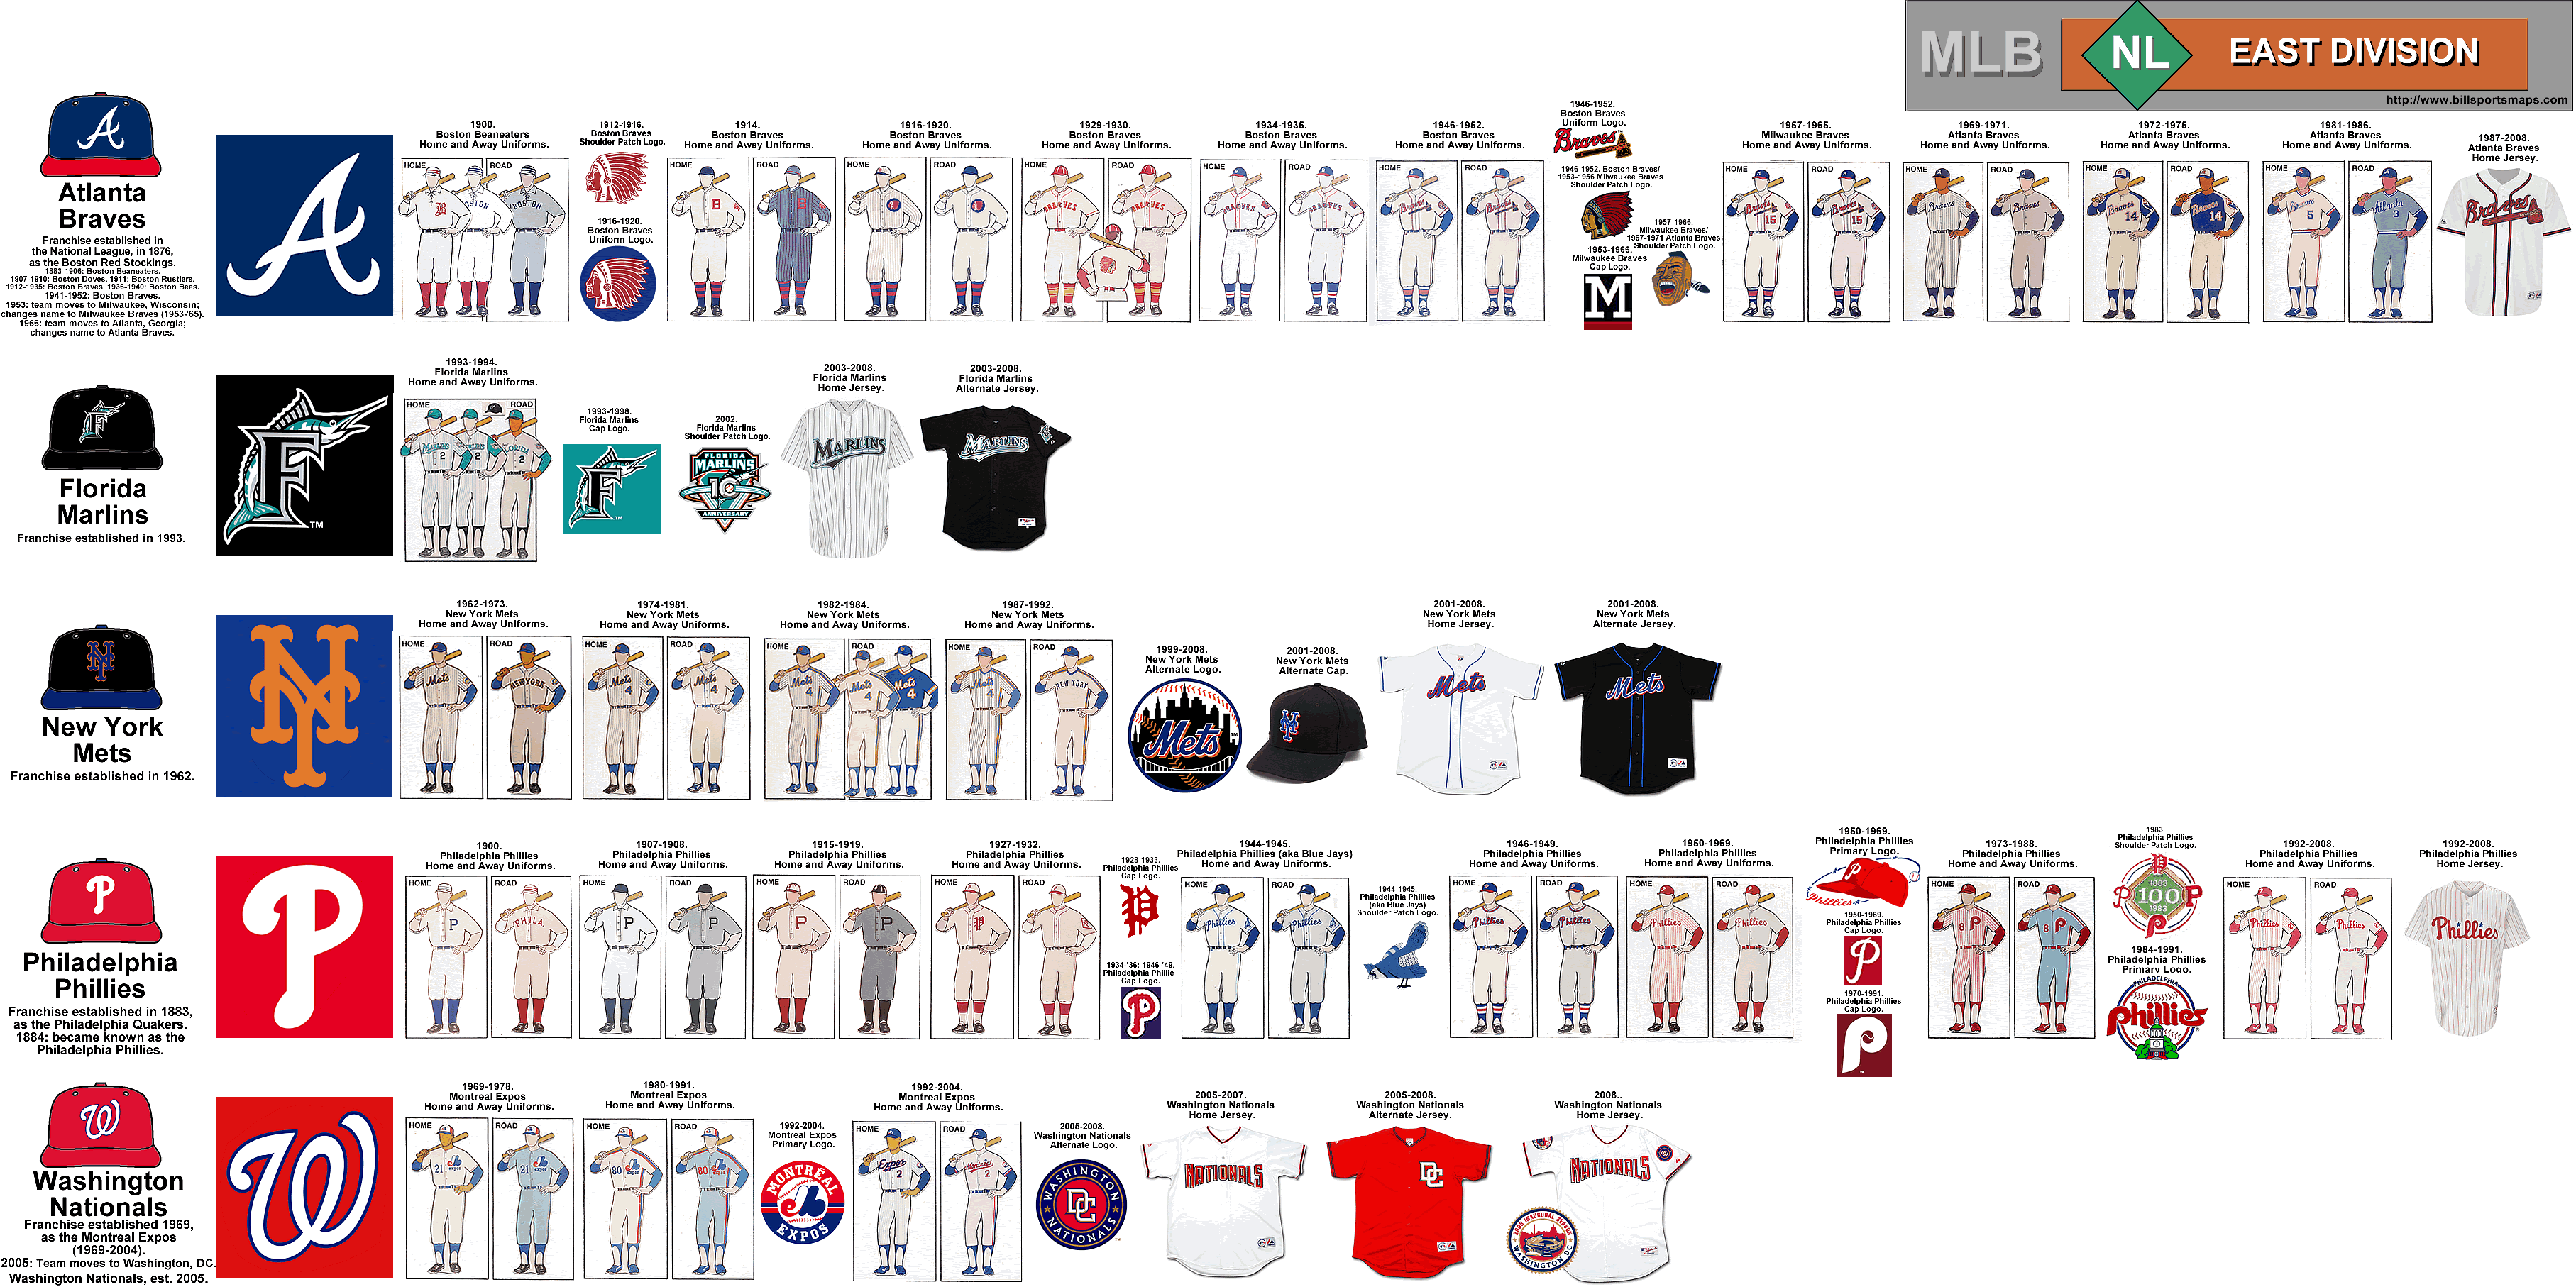 Washington Nationals Home Uniform - National League (NL) - Chris Creamer's  Sports Logos Page 